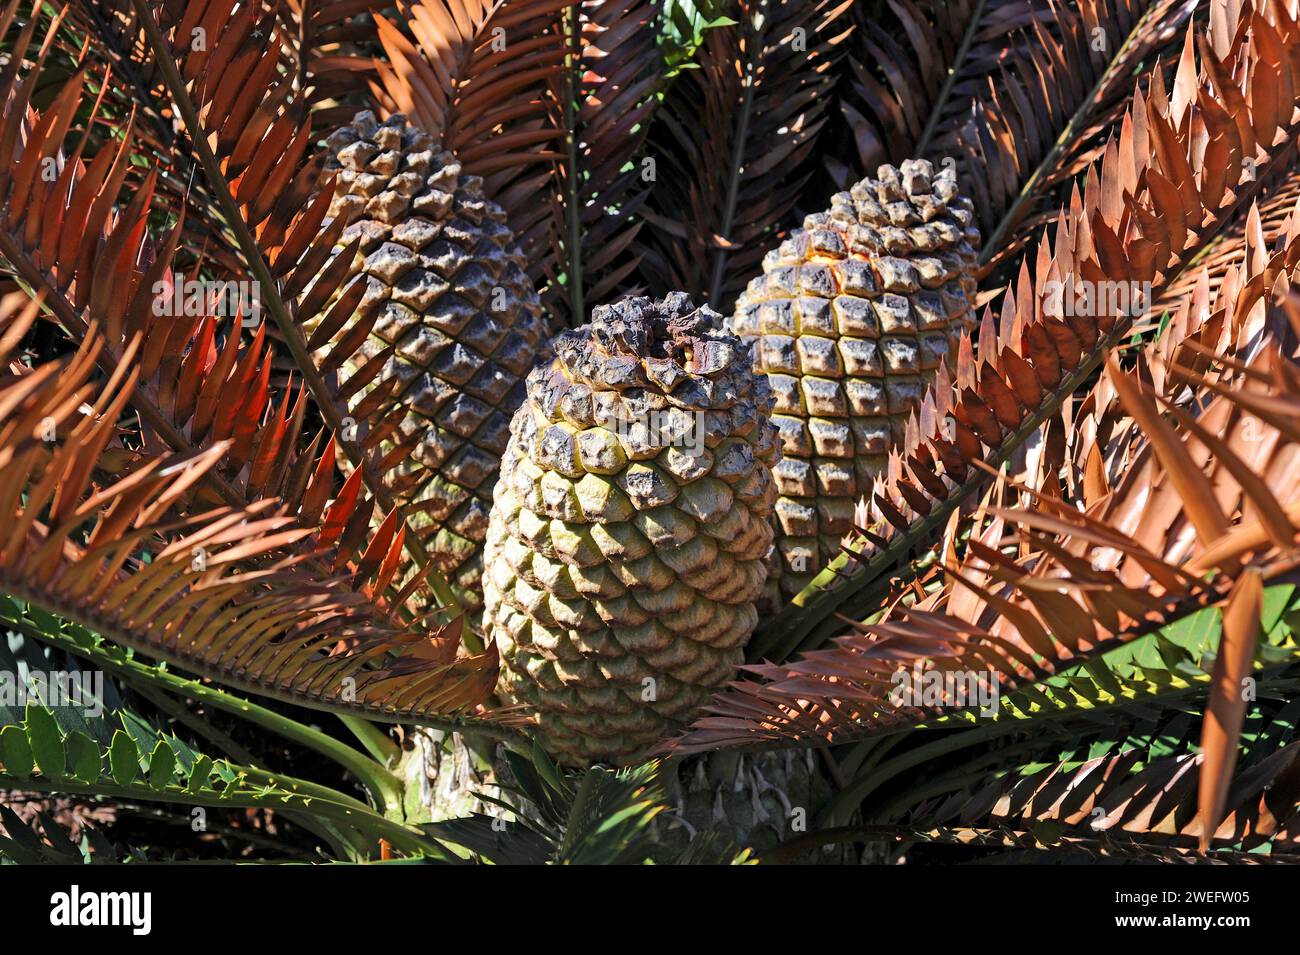 Lebombo cycad (Encephalartos lebomboensis) is a gymnosperm native to Lebombo Mountains in South Africa. Female cones detail. Stock Photo